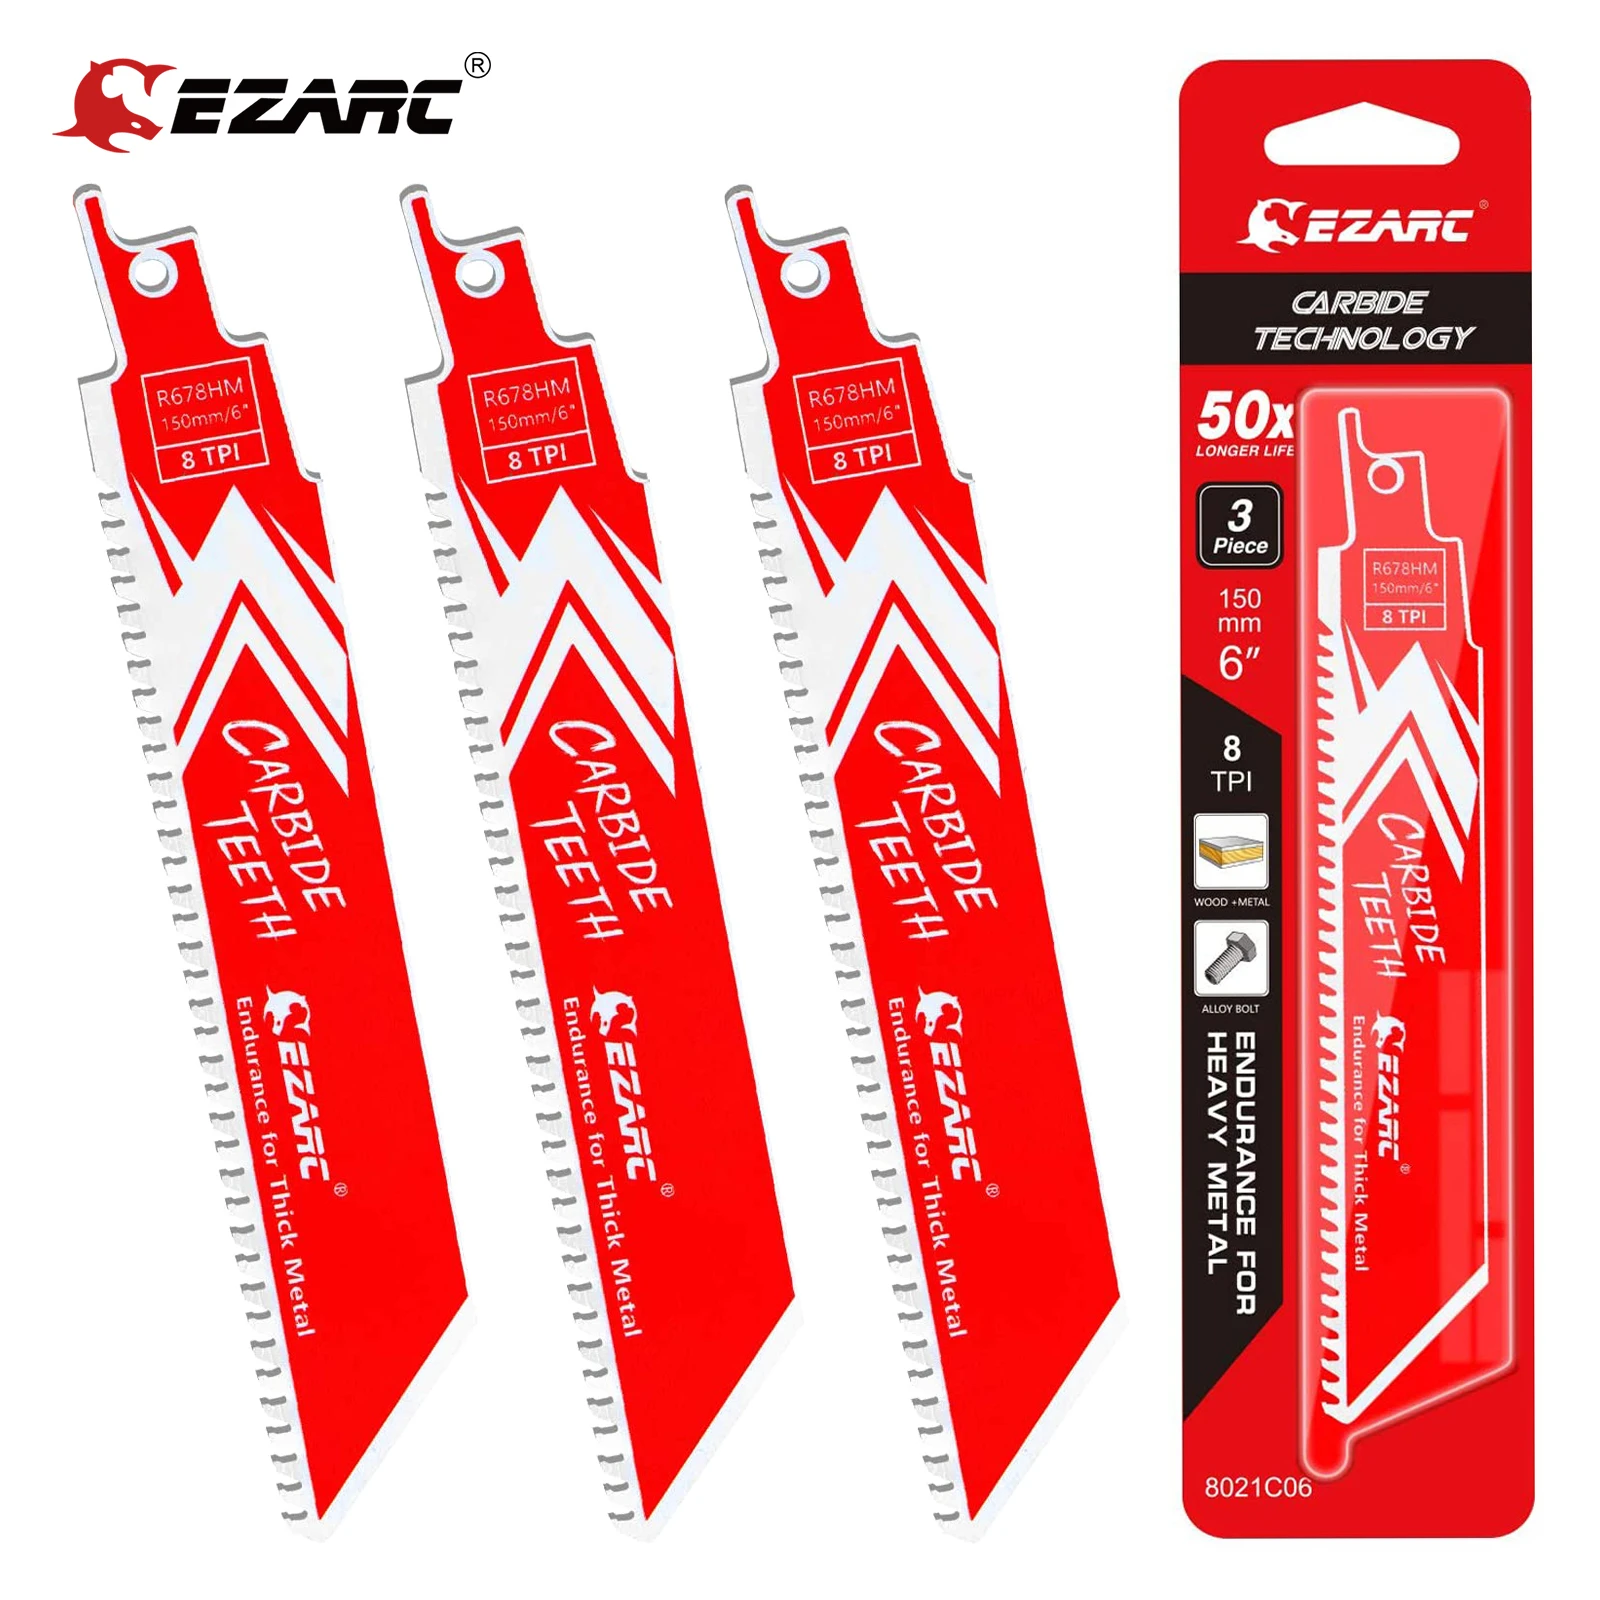 EZARC 1/3Pcs Carbide Reciprocating Saw Blade R678HM Endurance for Thick Metal,Cast Iron,Alloy Steel 6-Inch 8TPI,3pcs,9-Inch 8TPI